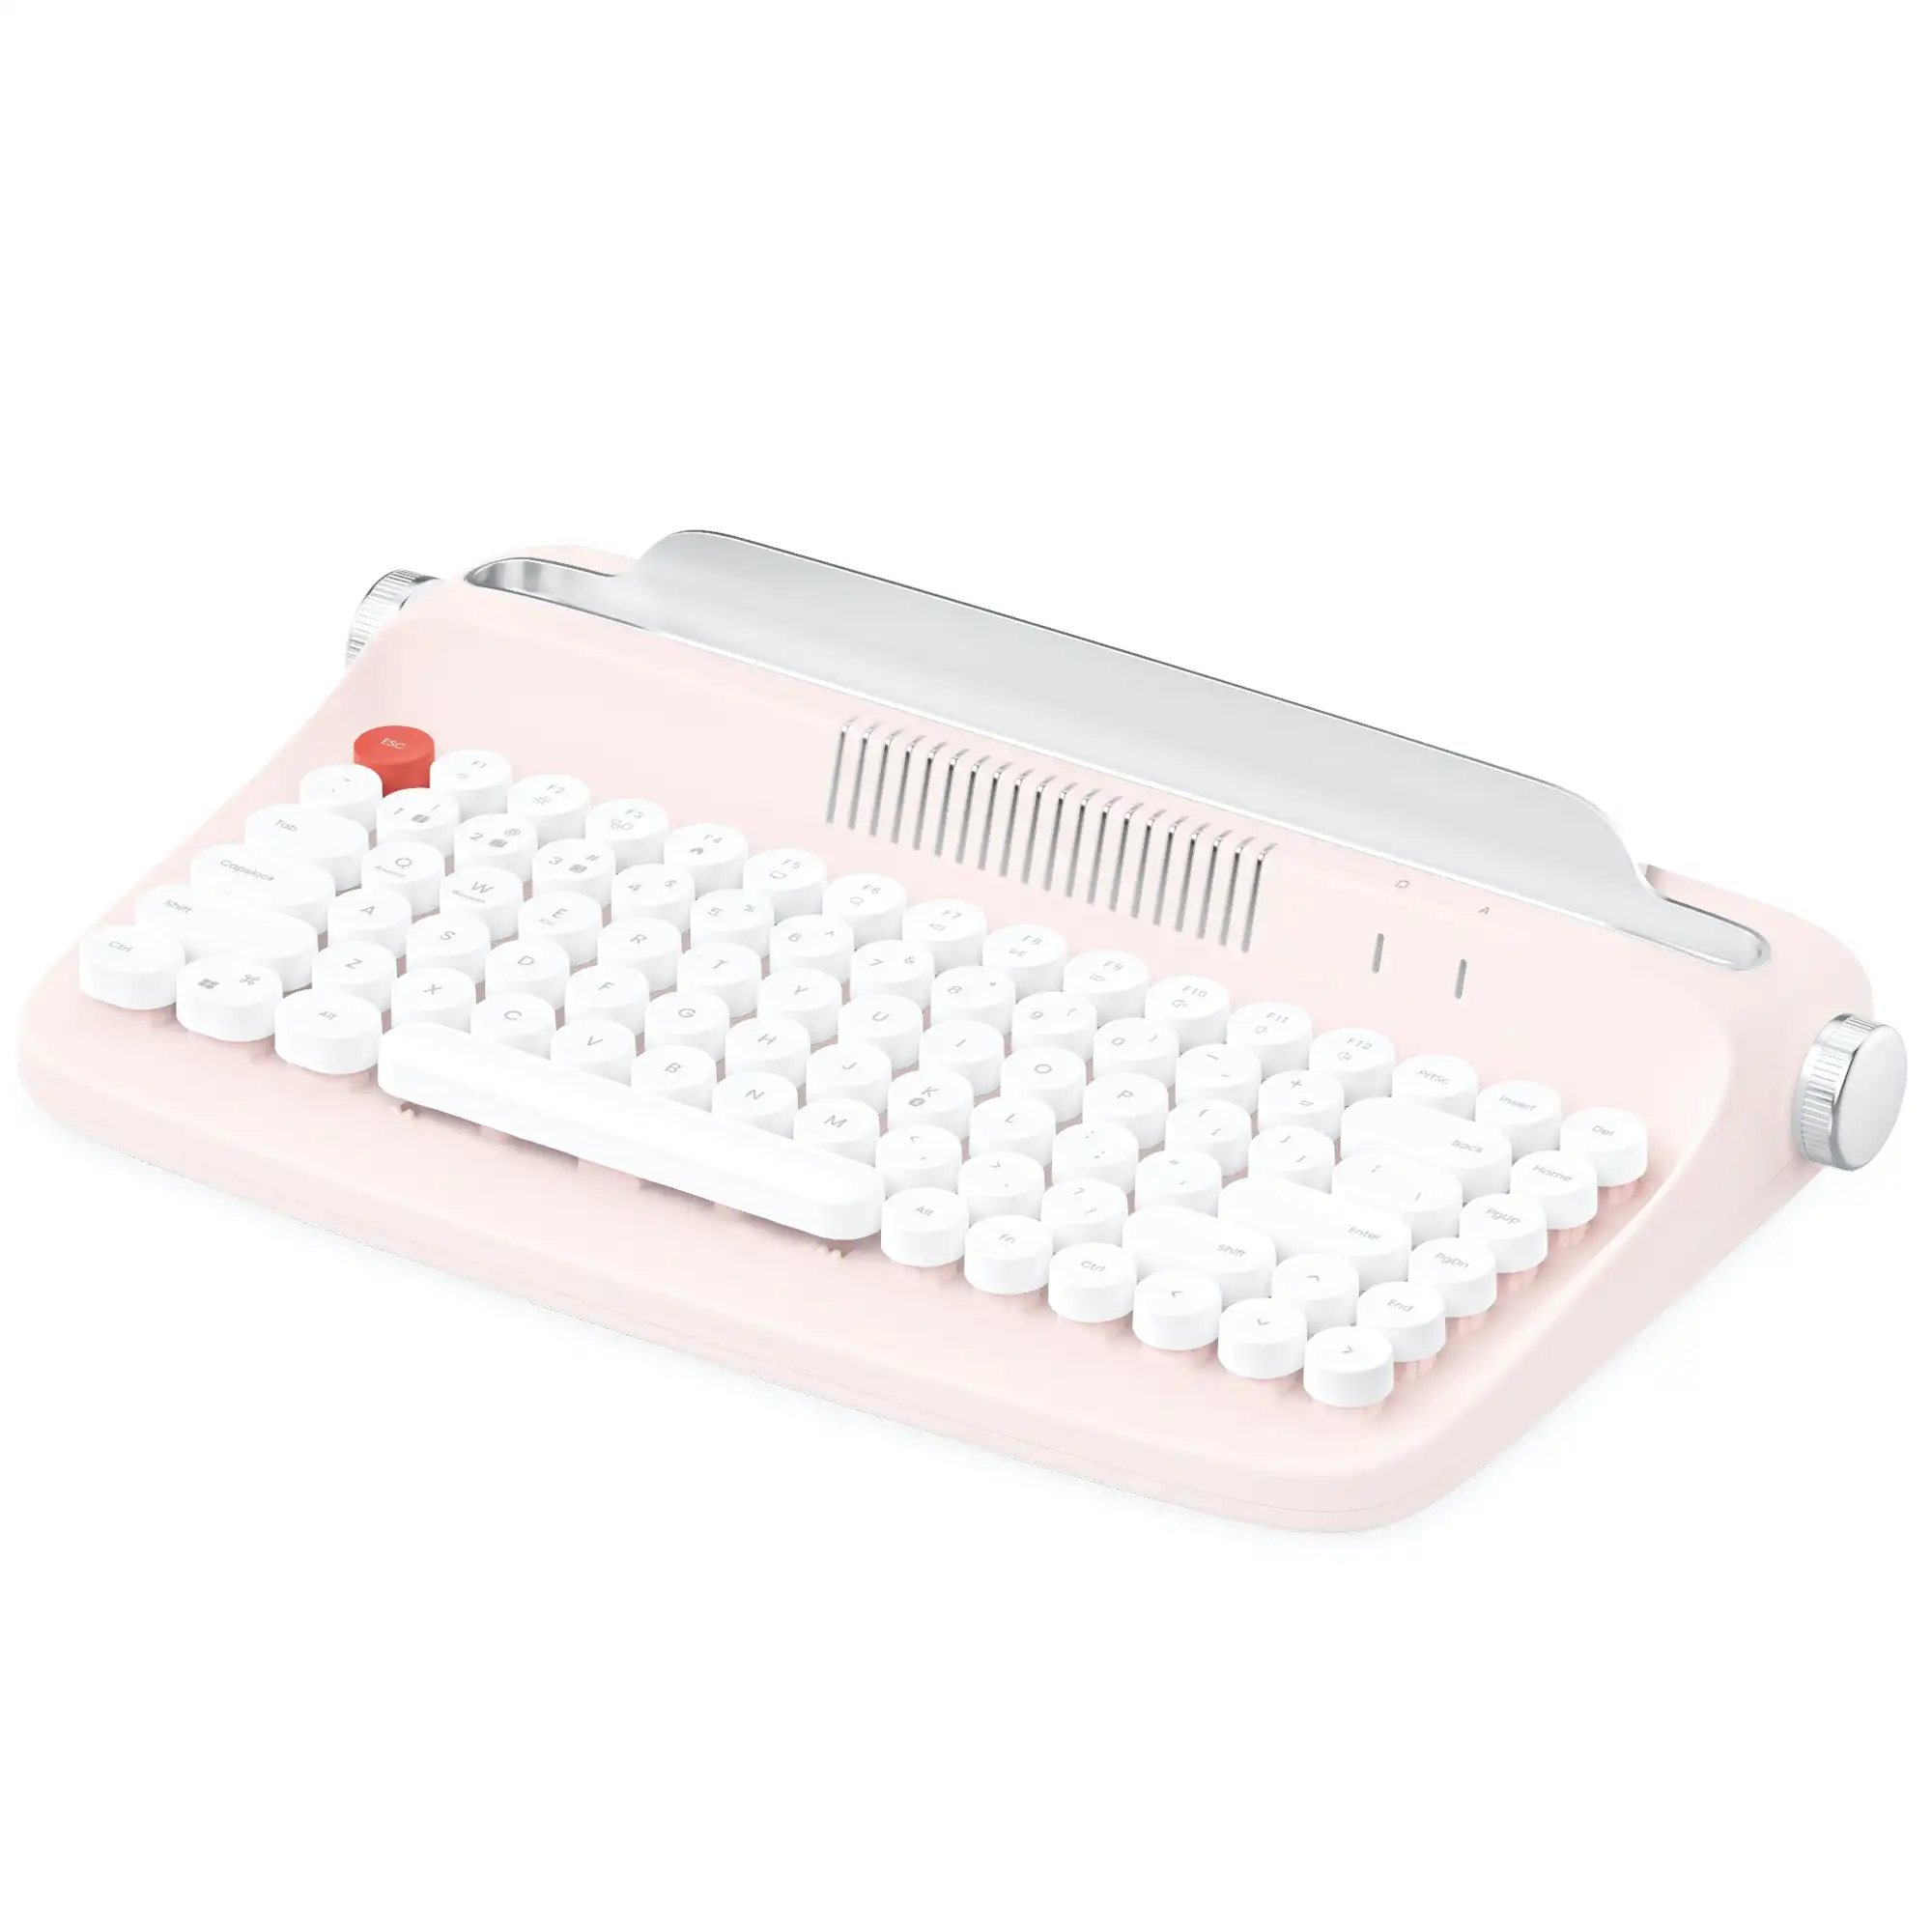 Todo Retro Typewriter Bluetooth Wireless Keyboard Tablet Holder 84 Key Mac Win Android BT 5.0 - Pink